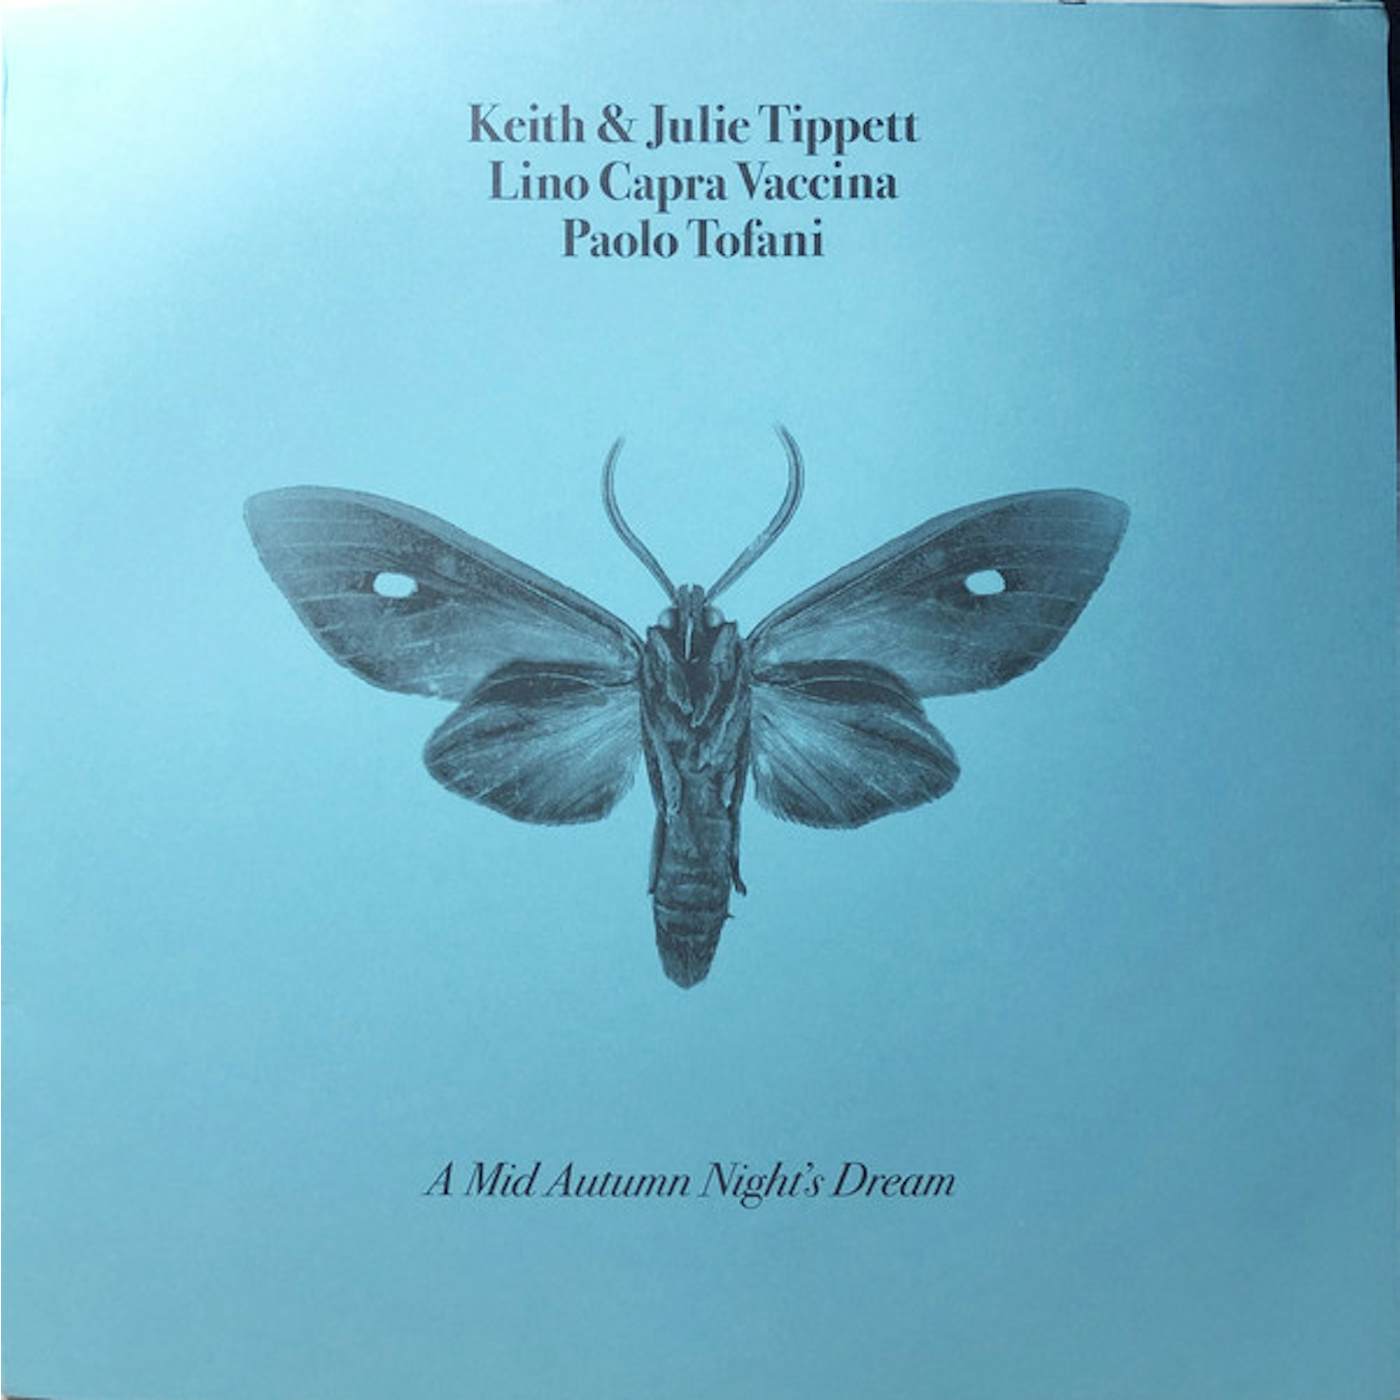 Tippett / Capra Vaccina / Tofani MID AUTUMN NIGHT'S DREAM Vinyl Record